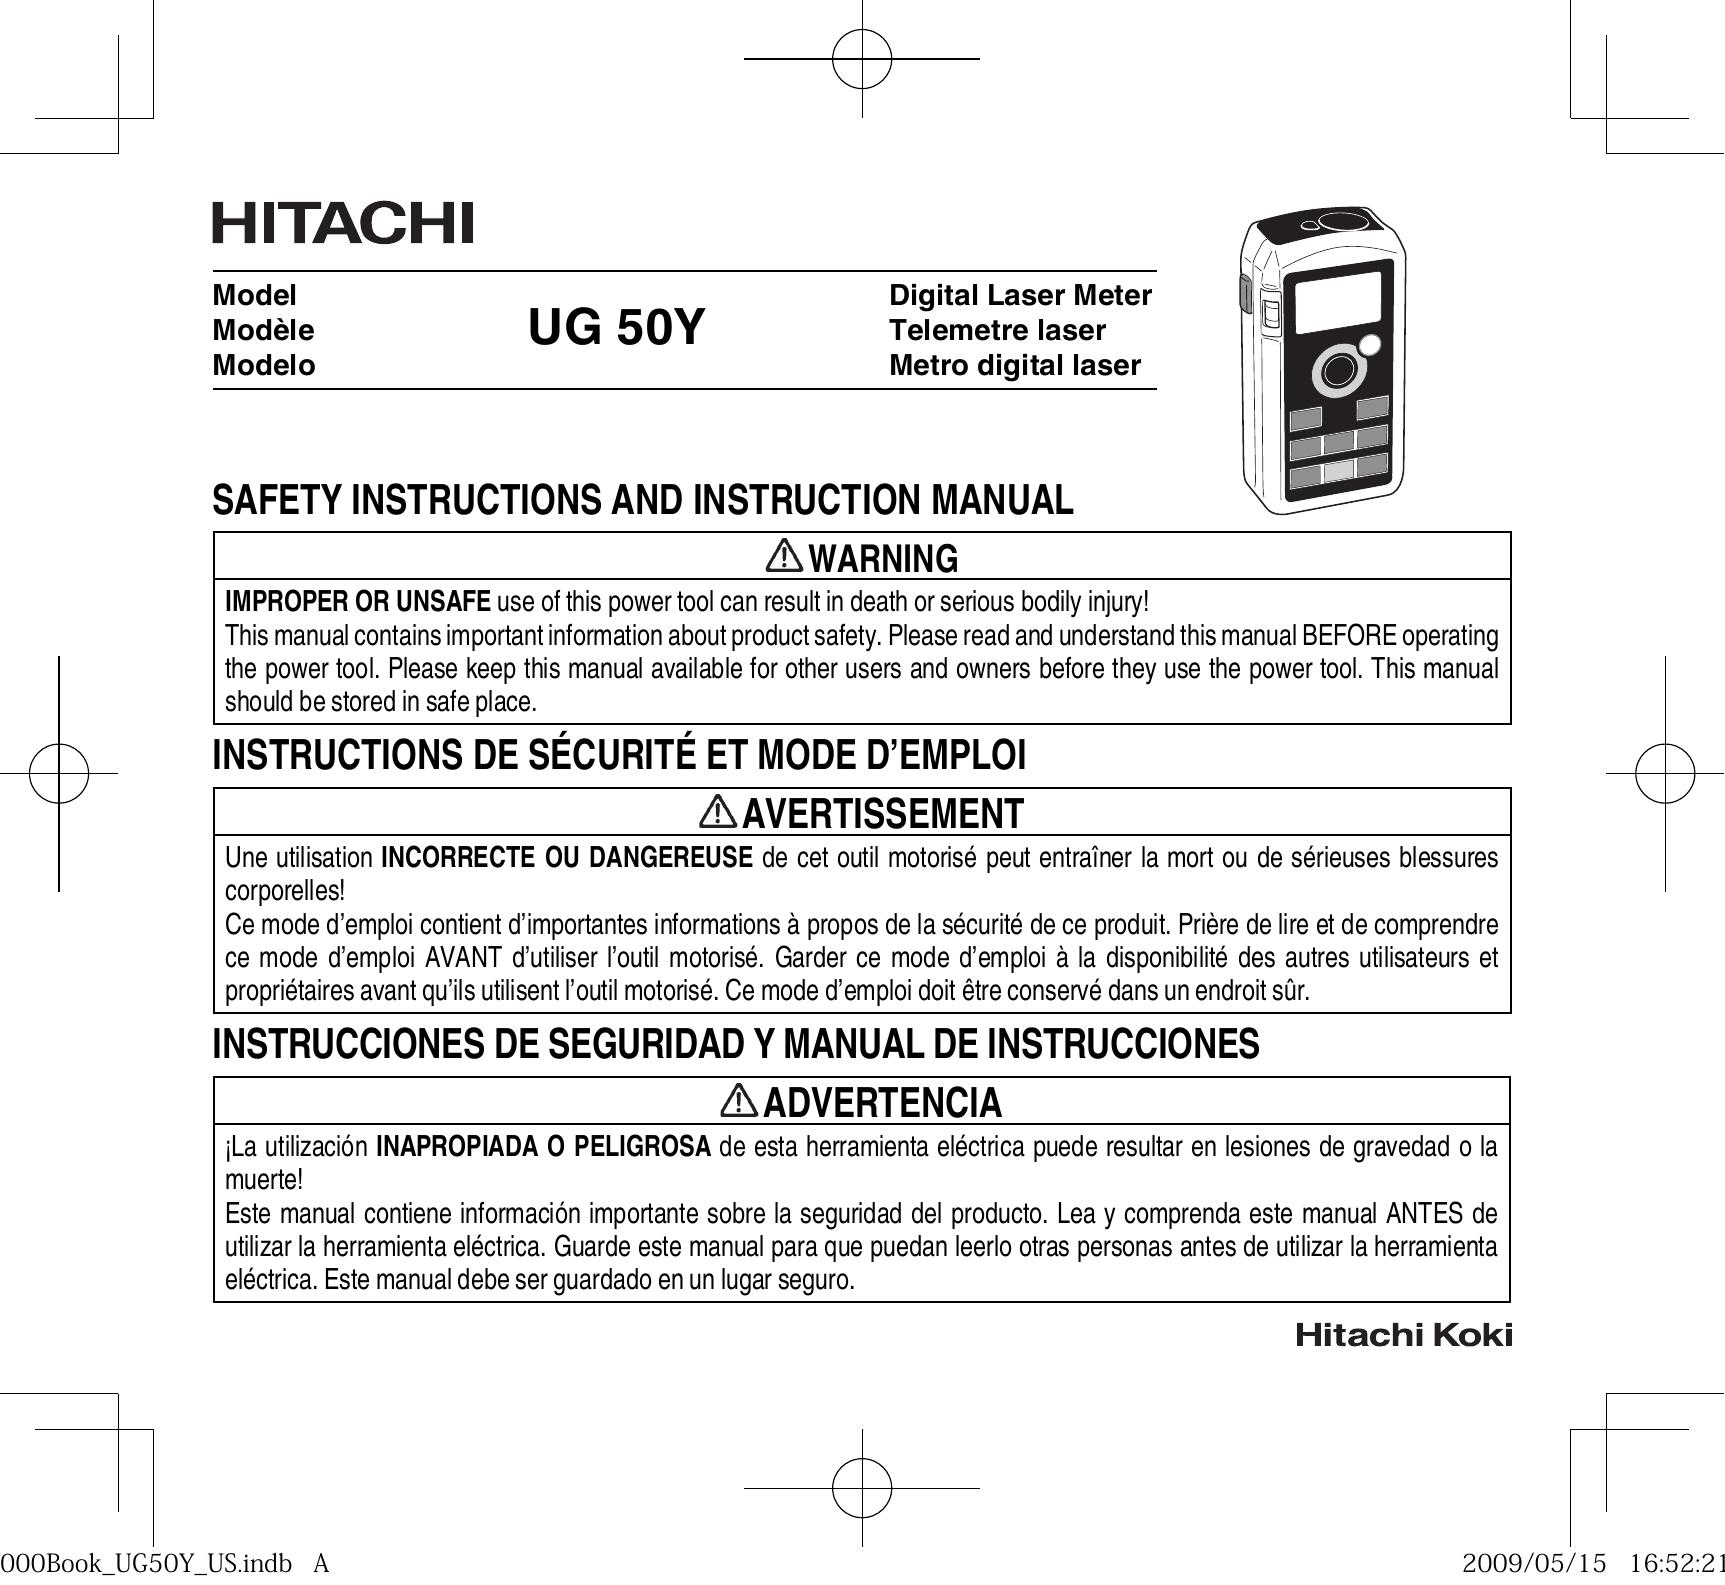 Hitachi Koki USA UG 50Y Marine Instruments User Manual